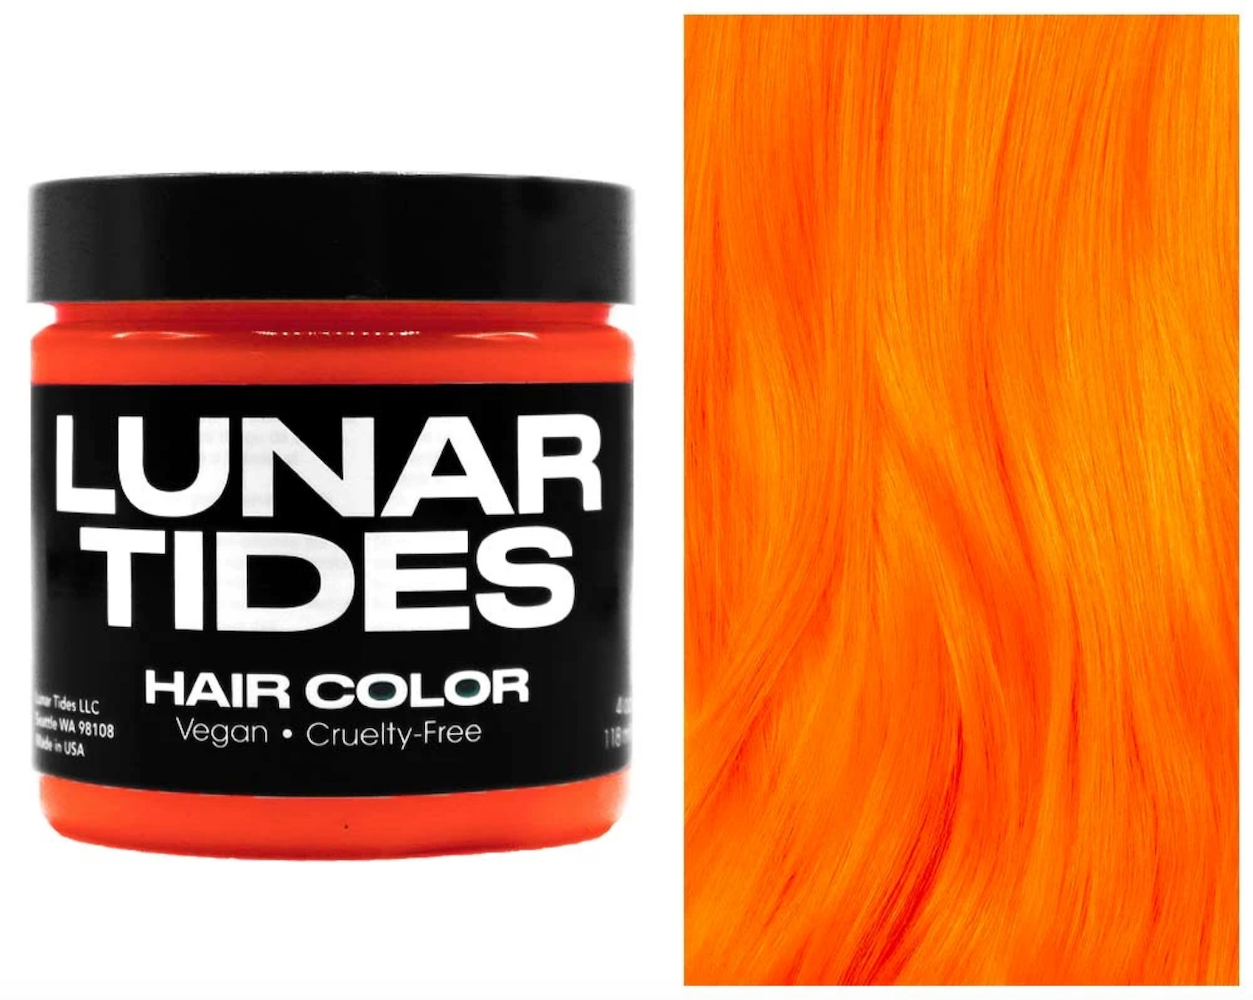 Lunar Tides Hair Dye - Neon tangerine, a neon orange jar of hair dye. Example of orange hair.